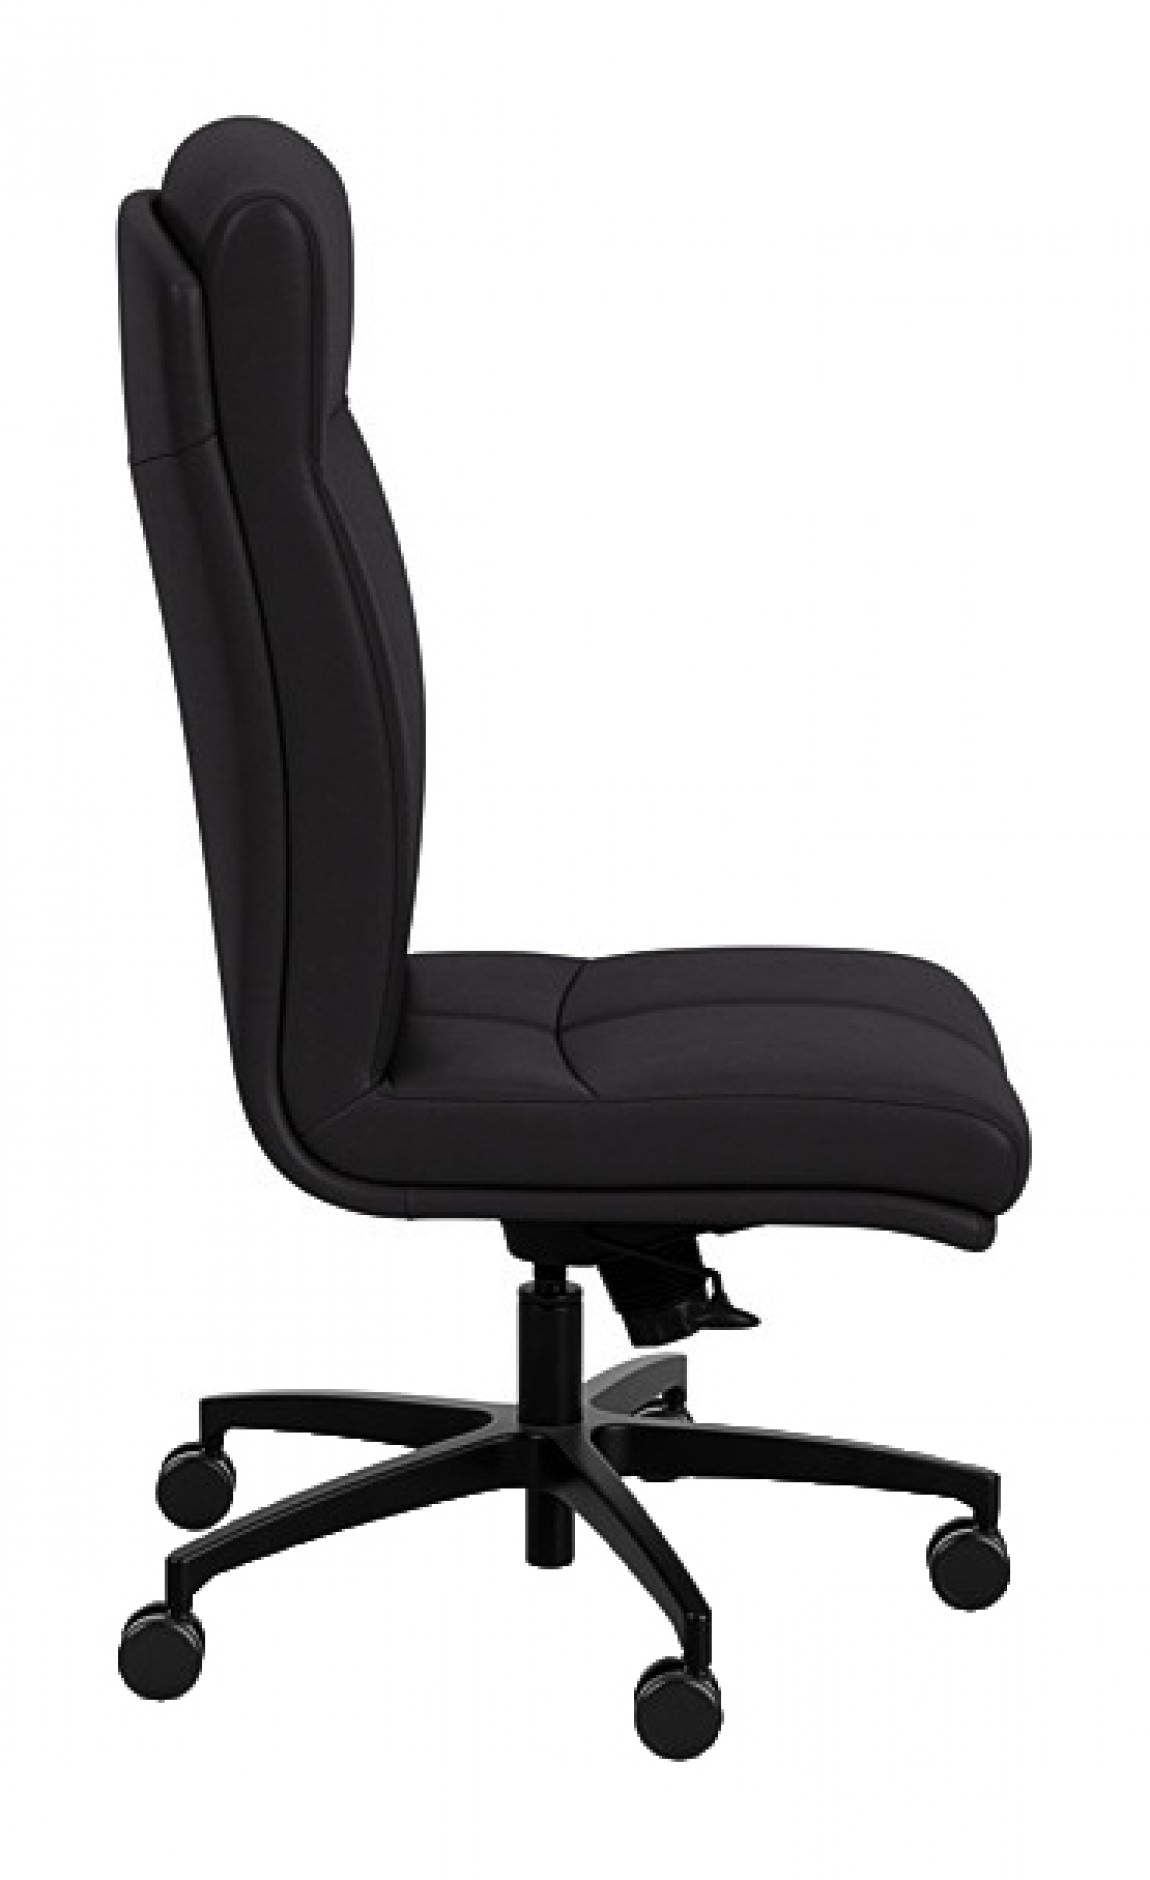 https://madisonliquidators.com/images/p/1150/29619-high-back-armless-office-chair-2.jpg